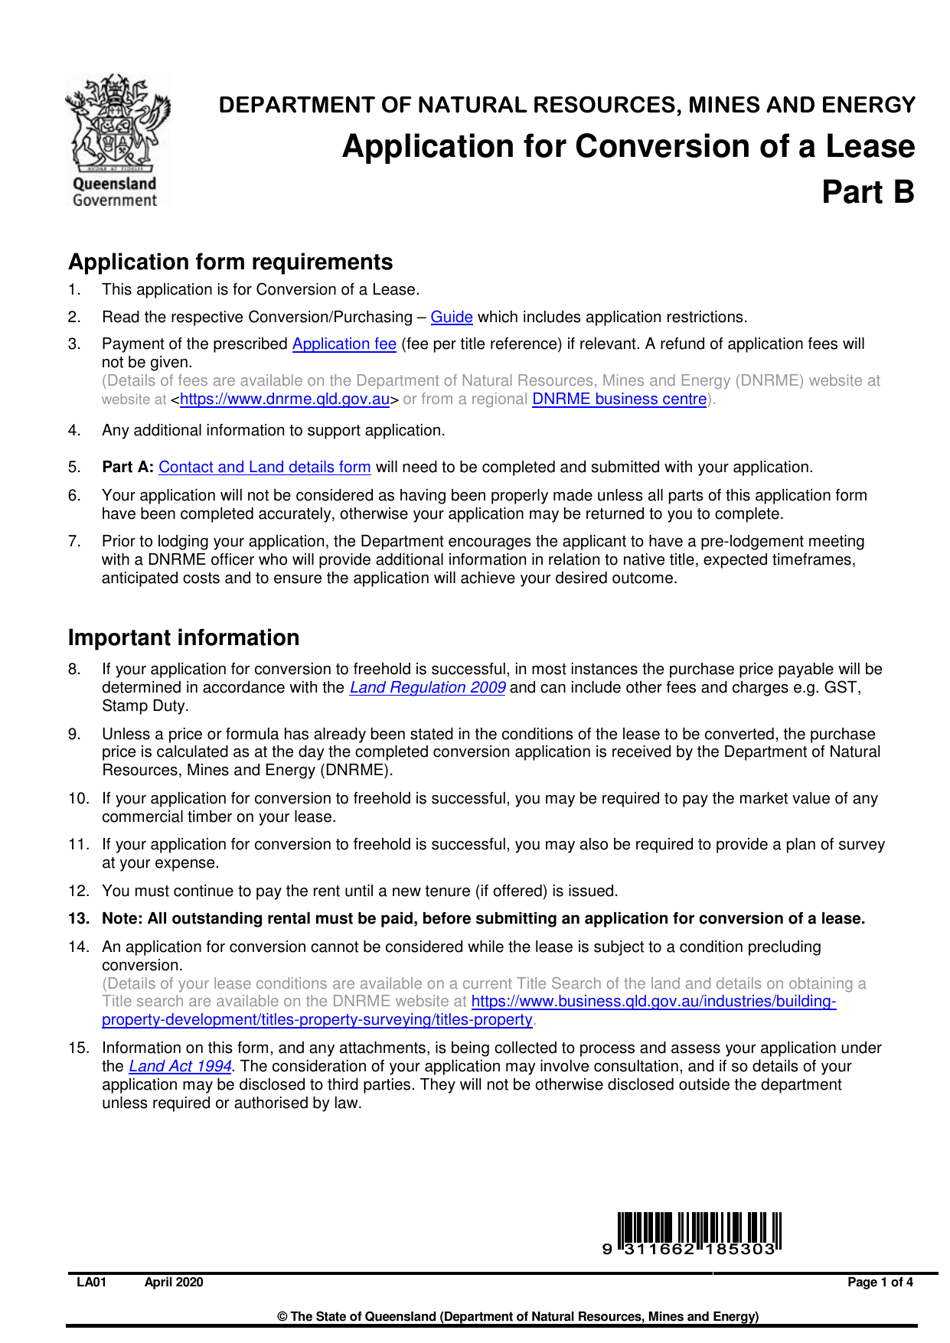 Form LA1 Part B Application for Conversion of a Lease - Queensland, Australia, Page 1